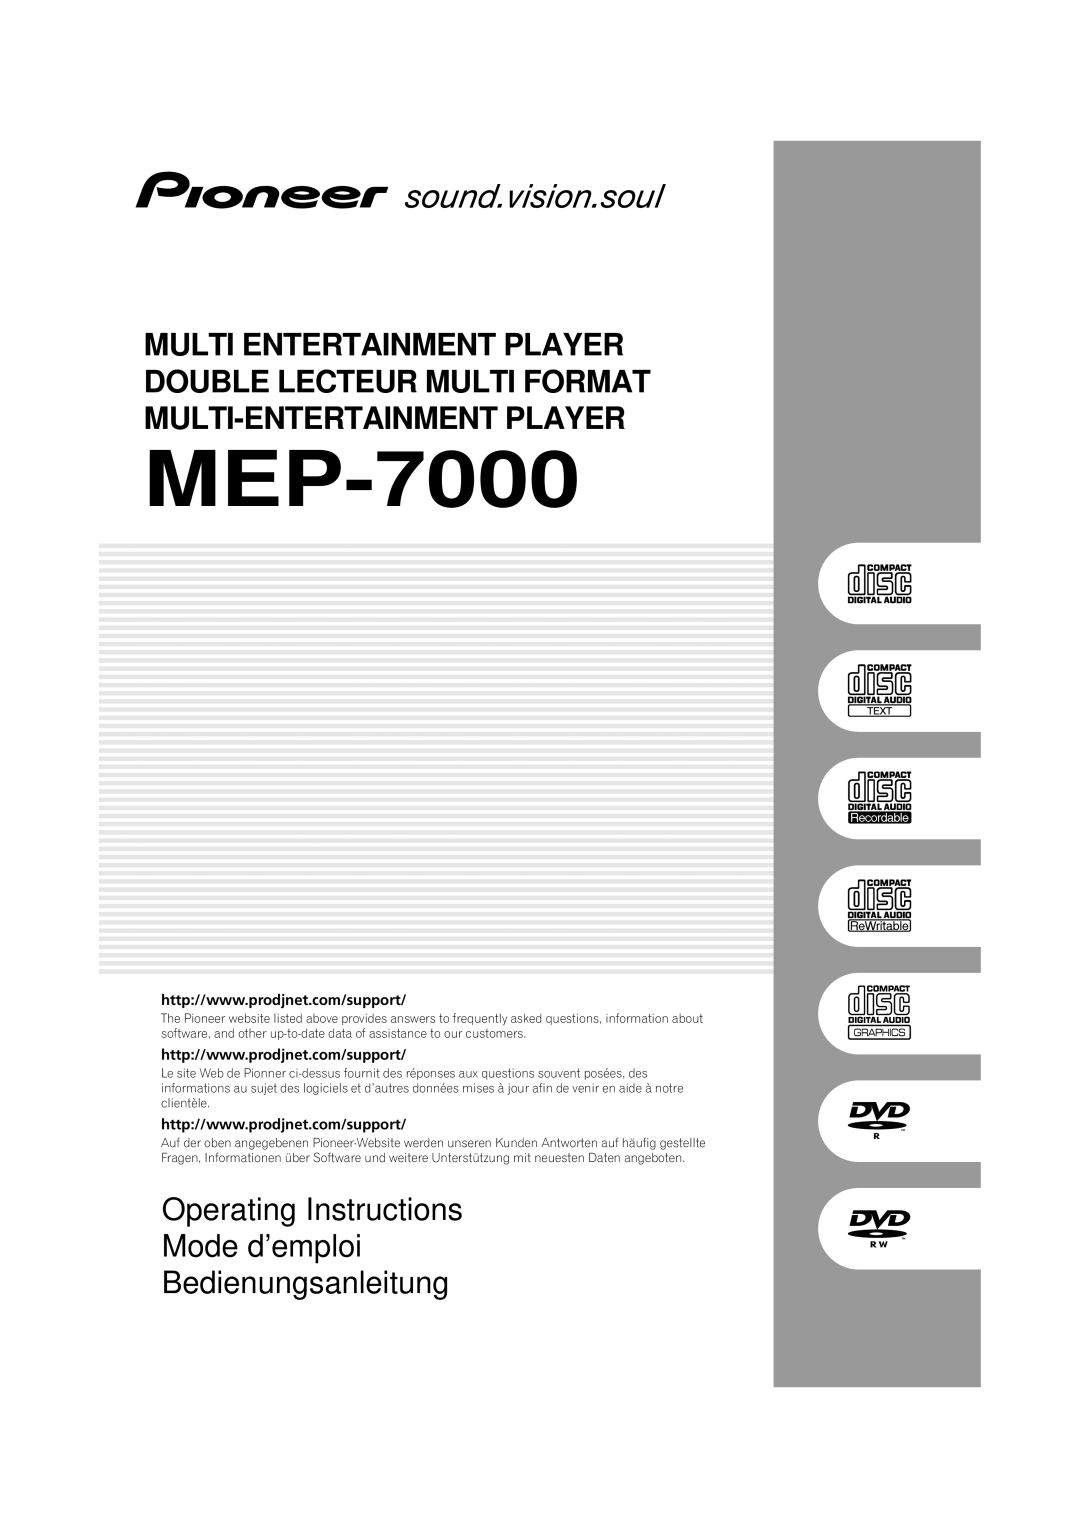 Pioneer MEP-7000 operating instructions Multi Entertainment Player, Operating Instructions 